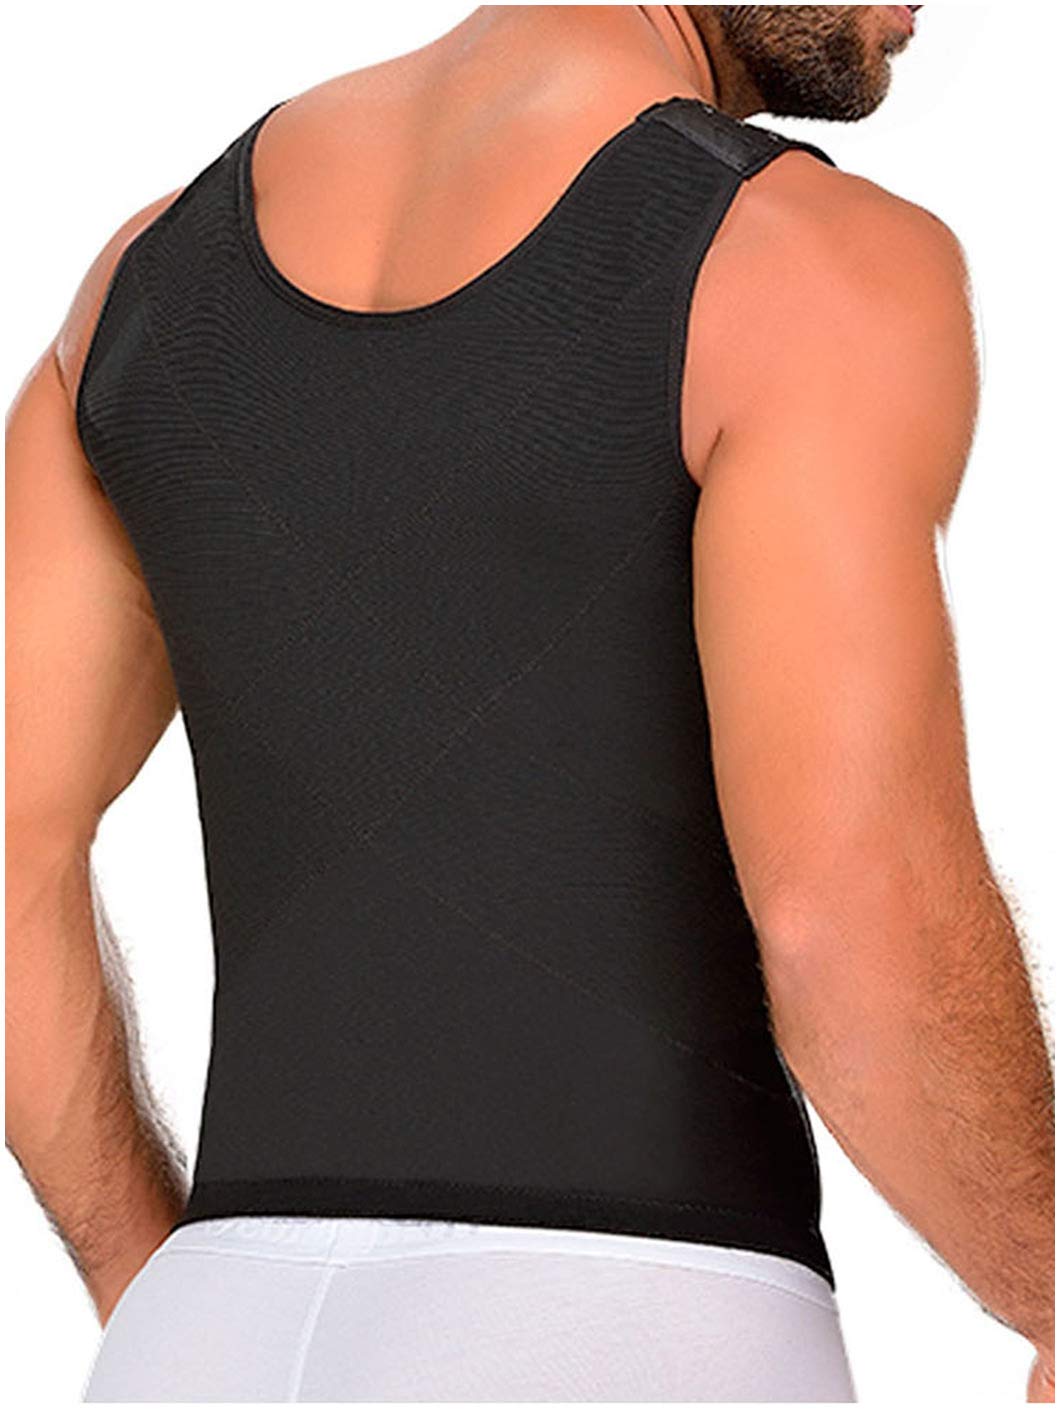 M&D 0760 Gym Compression Vest Shirt Girdles for Men